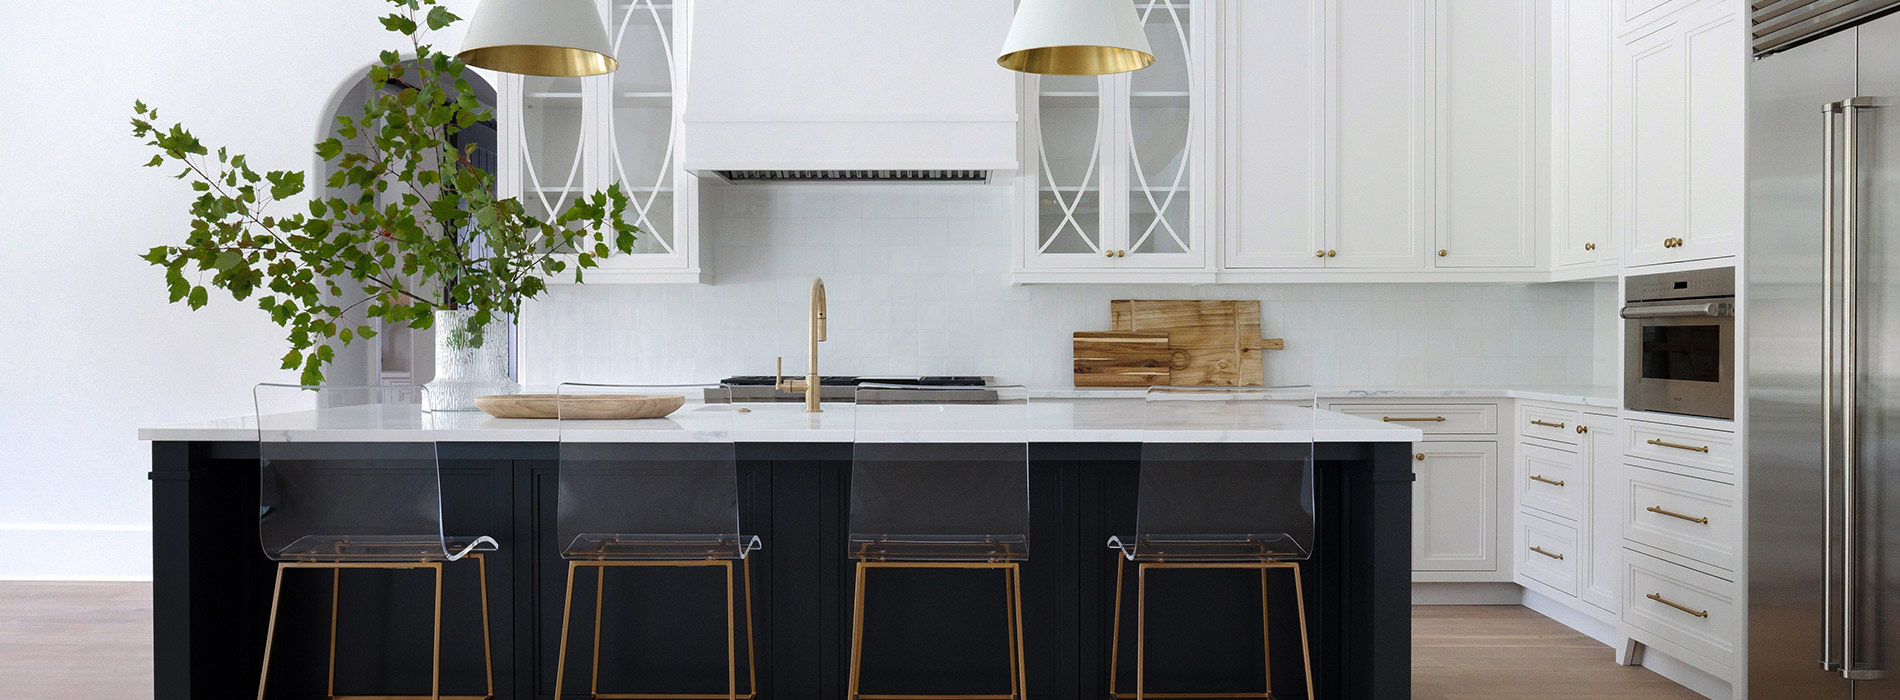 Cristi Holcombe Interiors custom kitchen design project